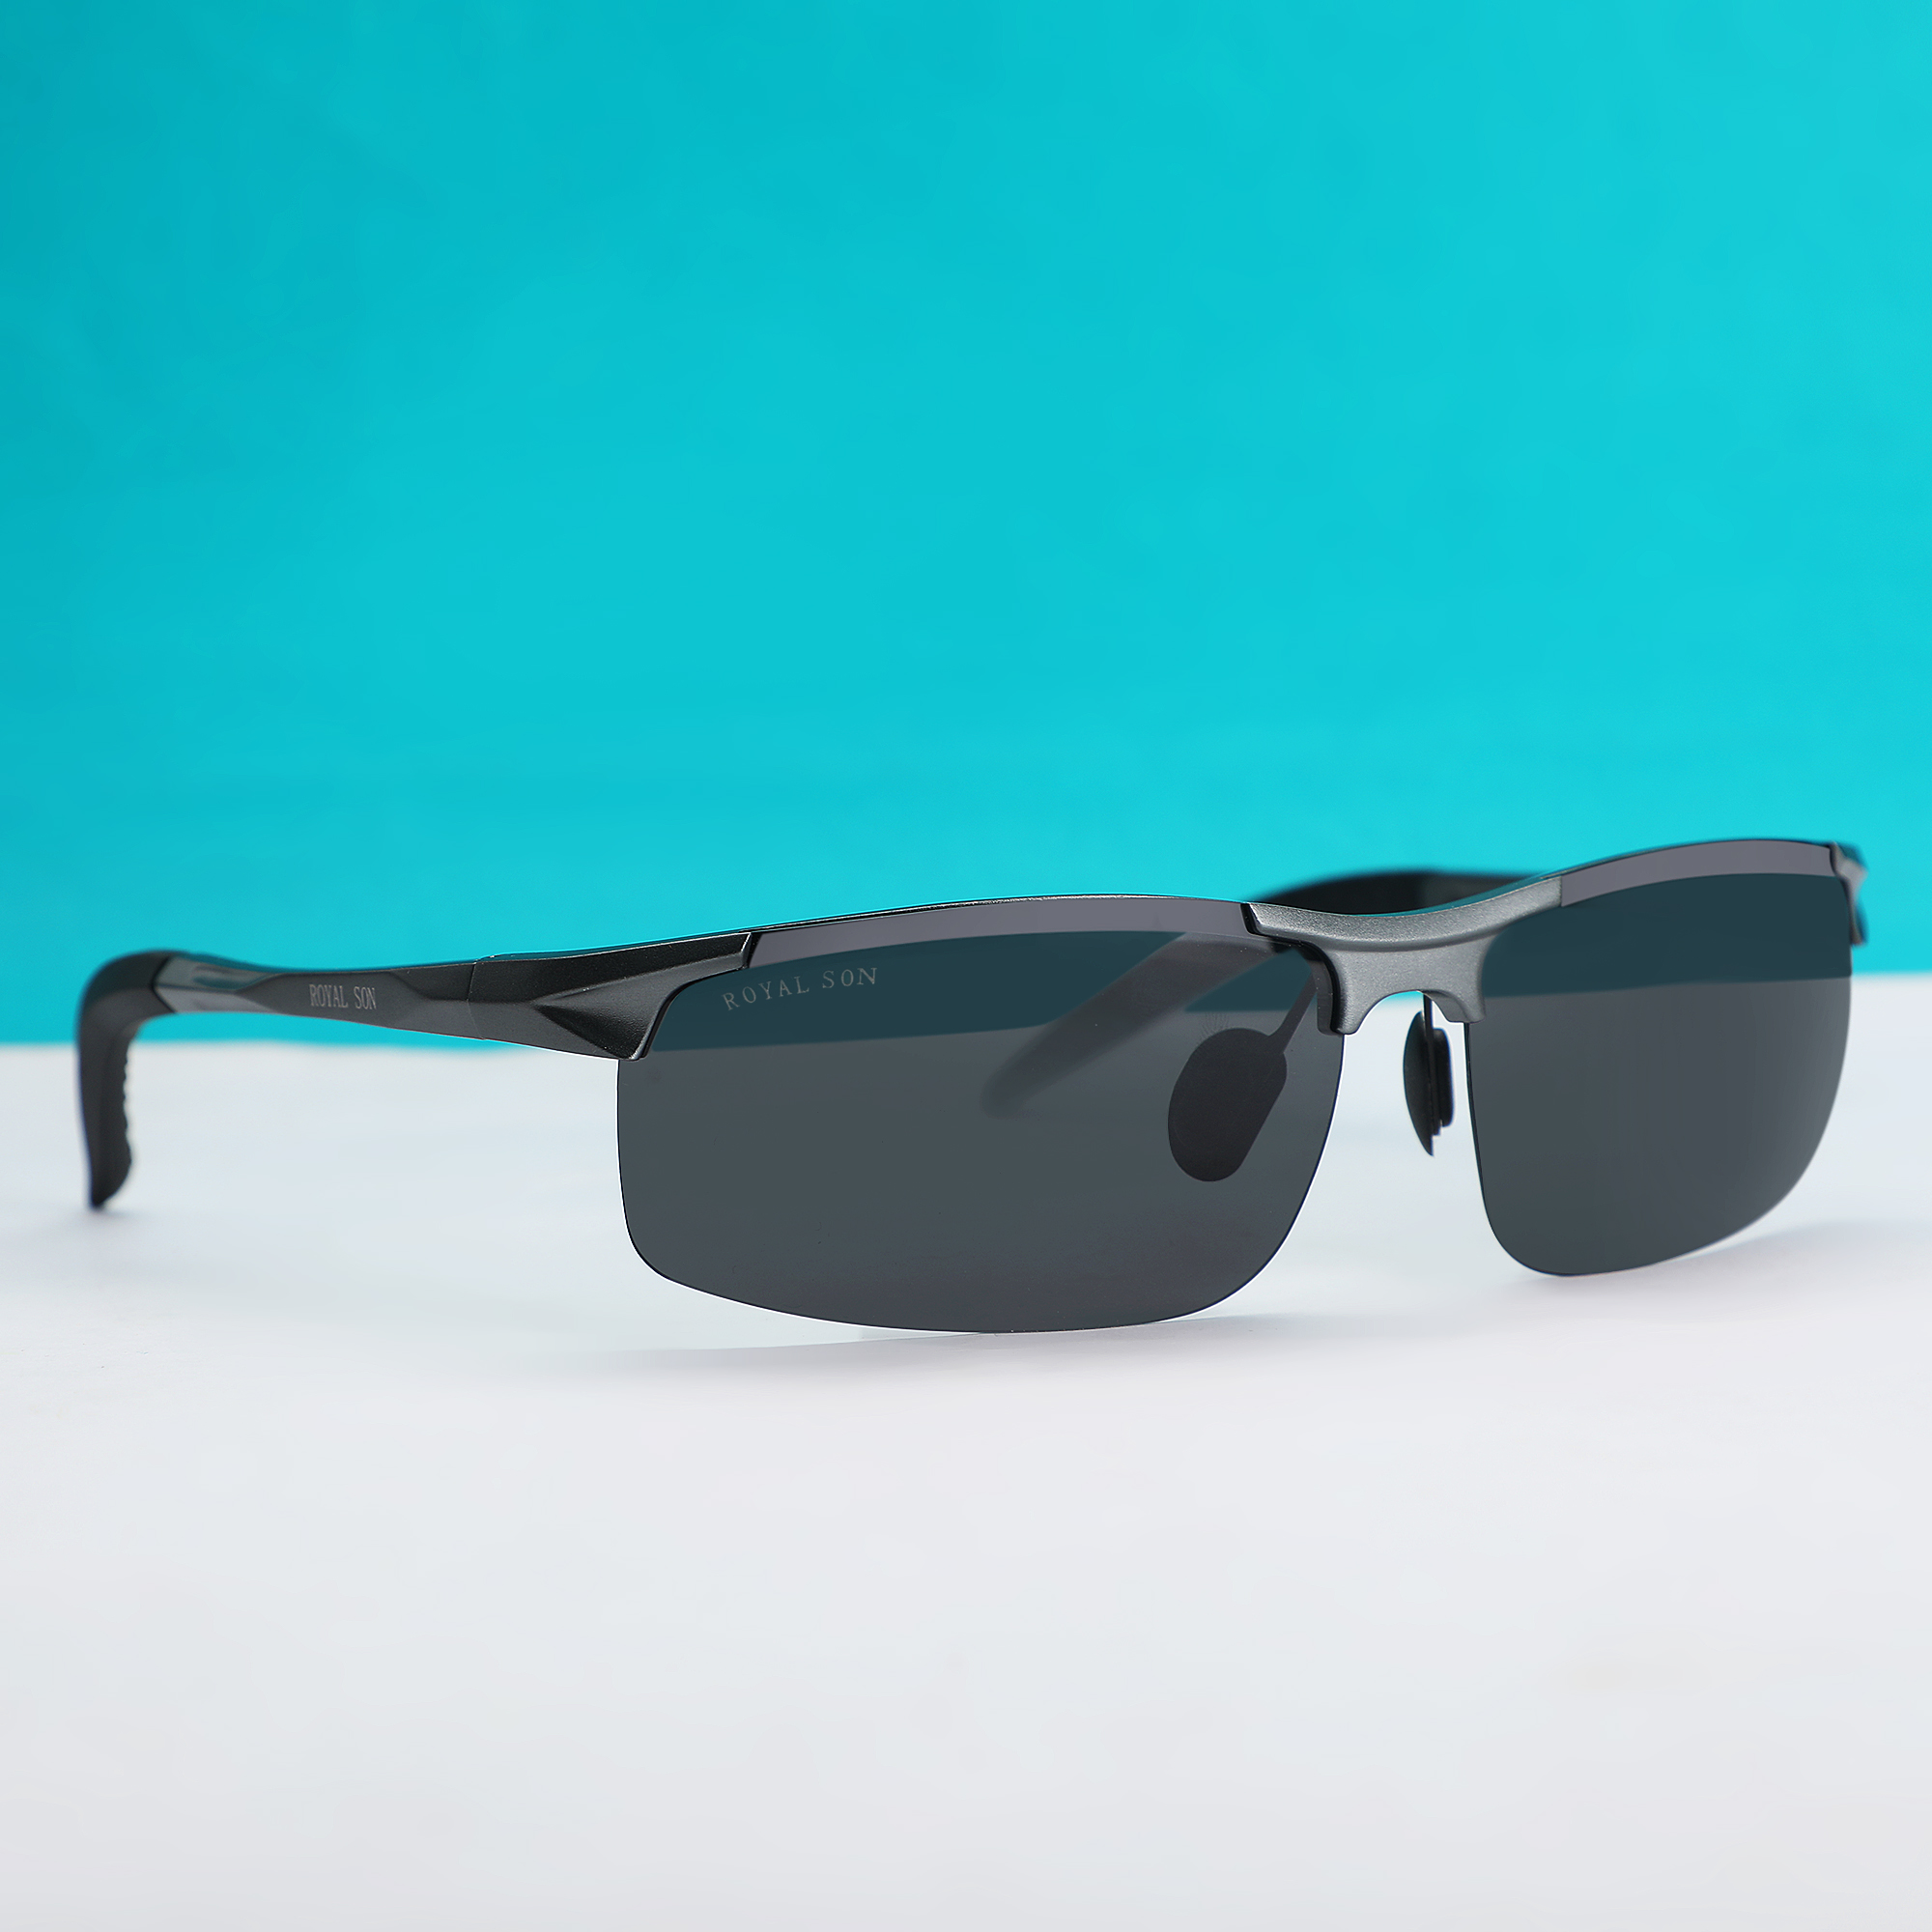 Polarized Sunglasses Buyer's Guide | SportRx